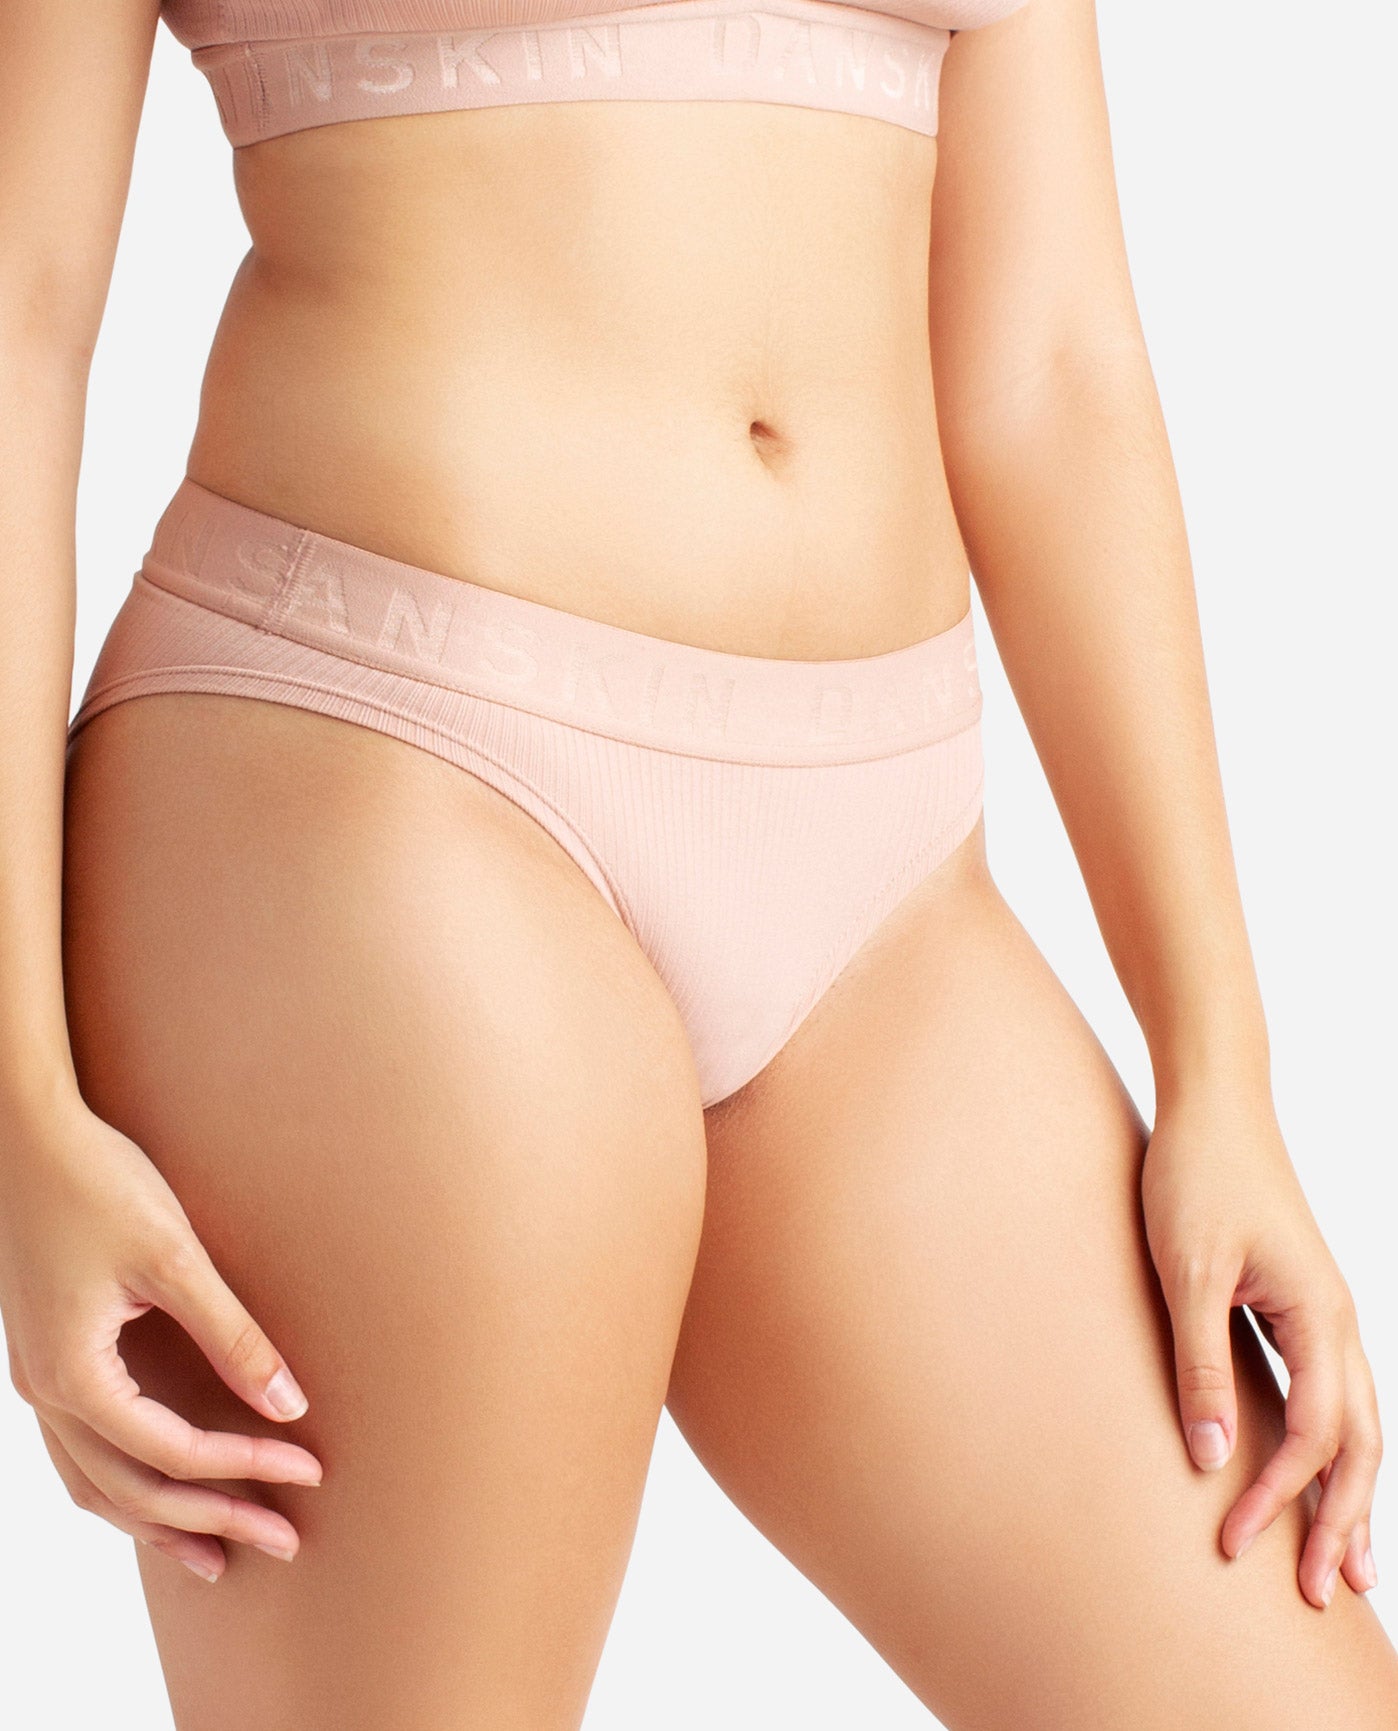 Brand Max Designer Outlet - Danskin women's underwear 😃 Designer labels  for less 💙⁠